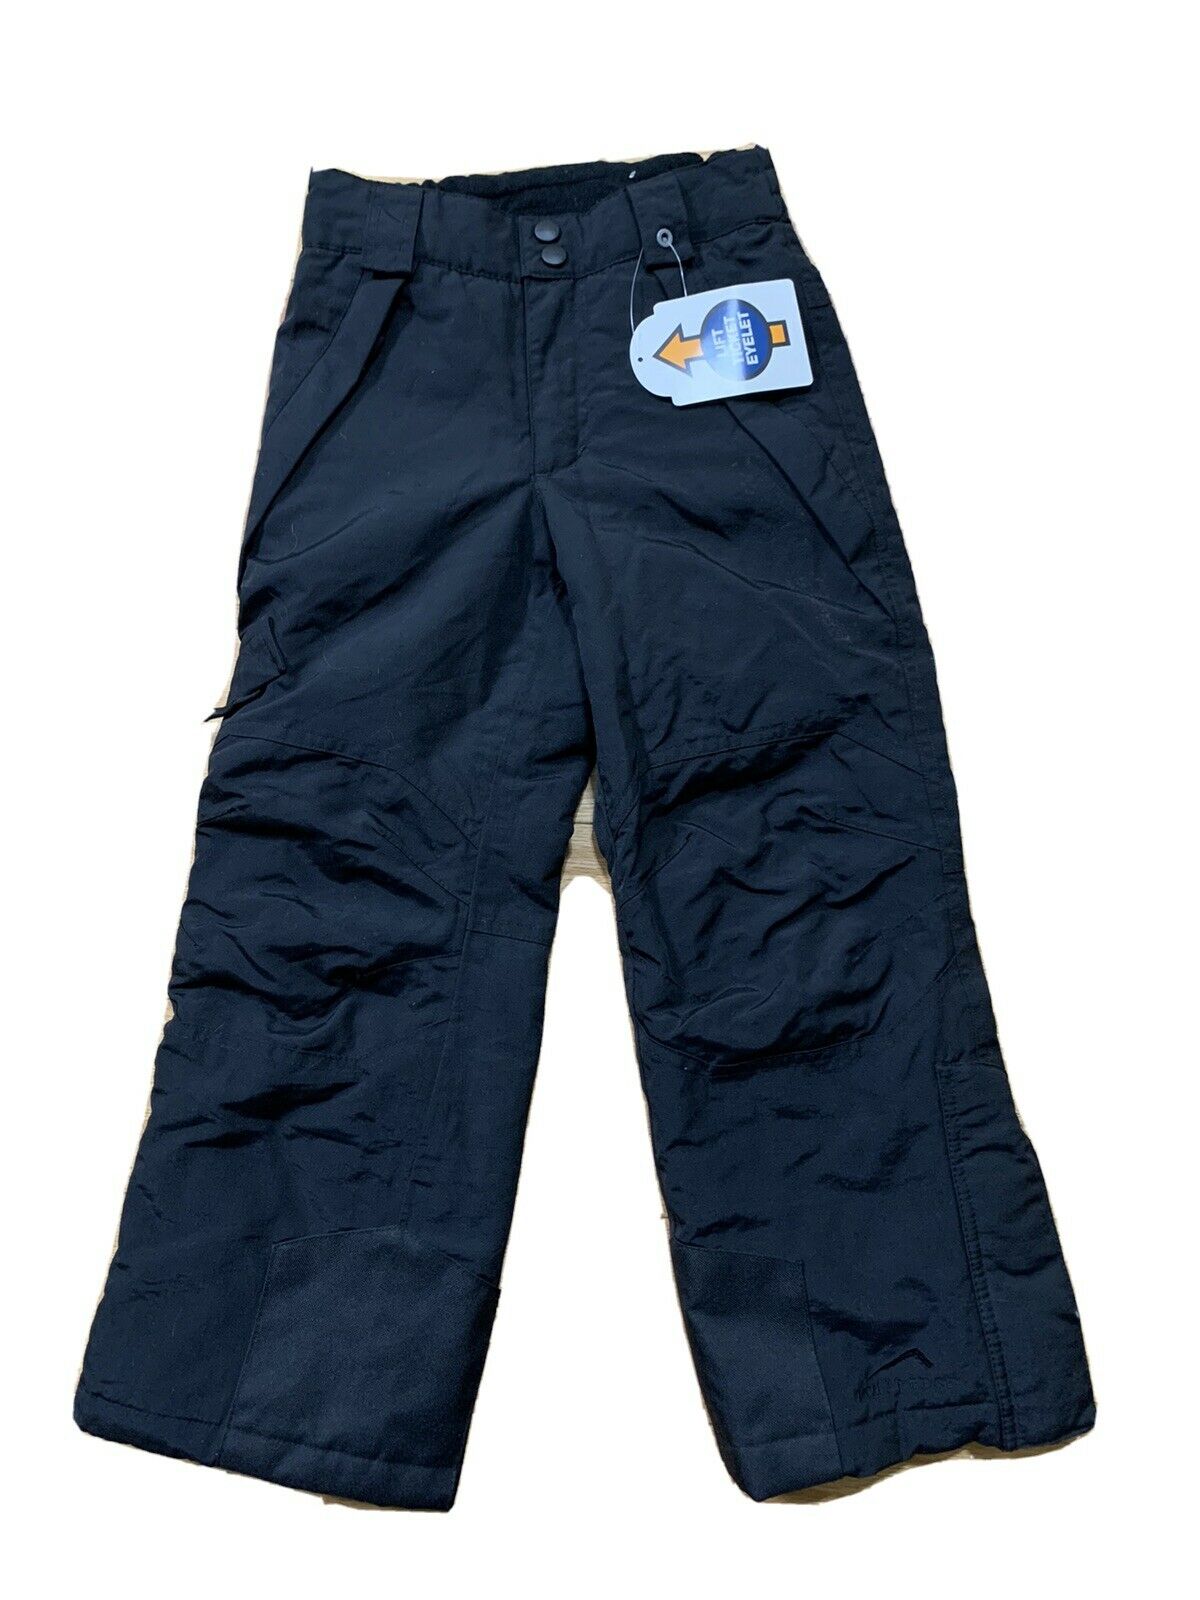 Polar Edge Black Insulated Snow Ski Silver Series Pants Pockets Youth Small